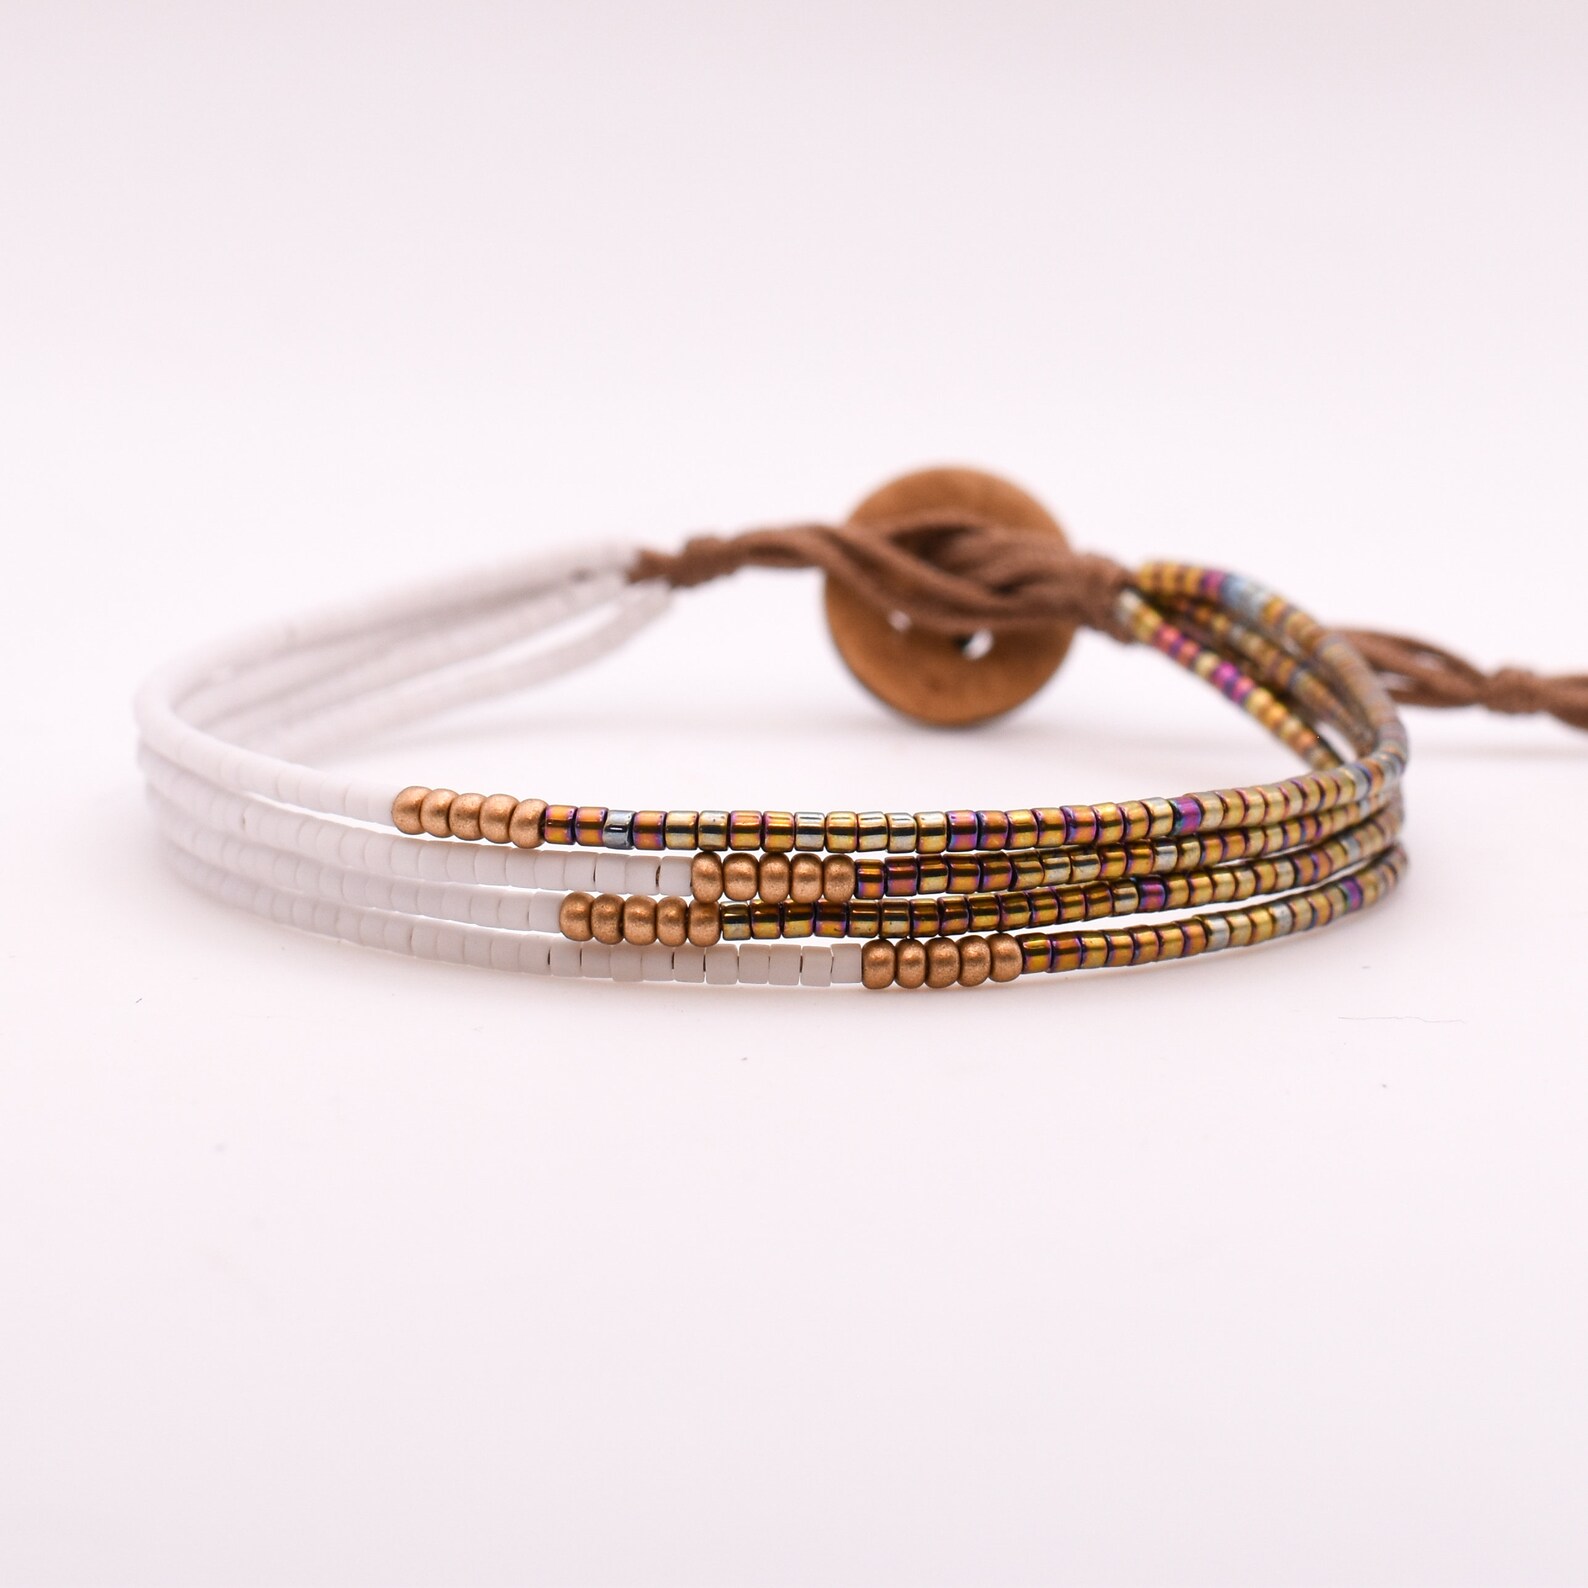 Glass and Metallic Beads Bracelet